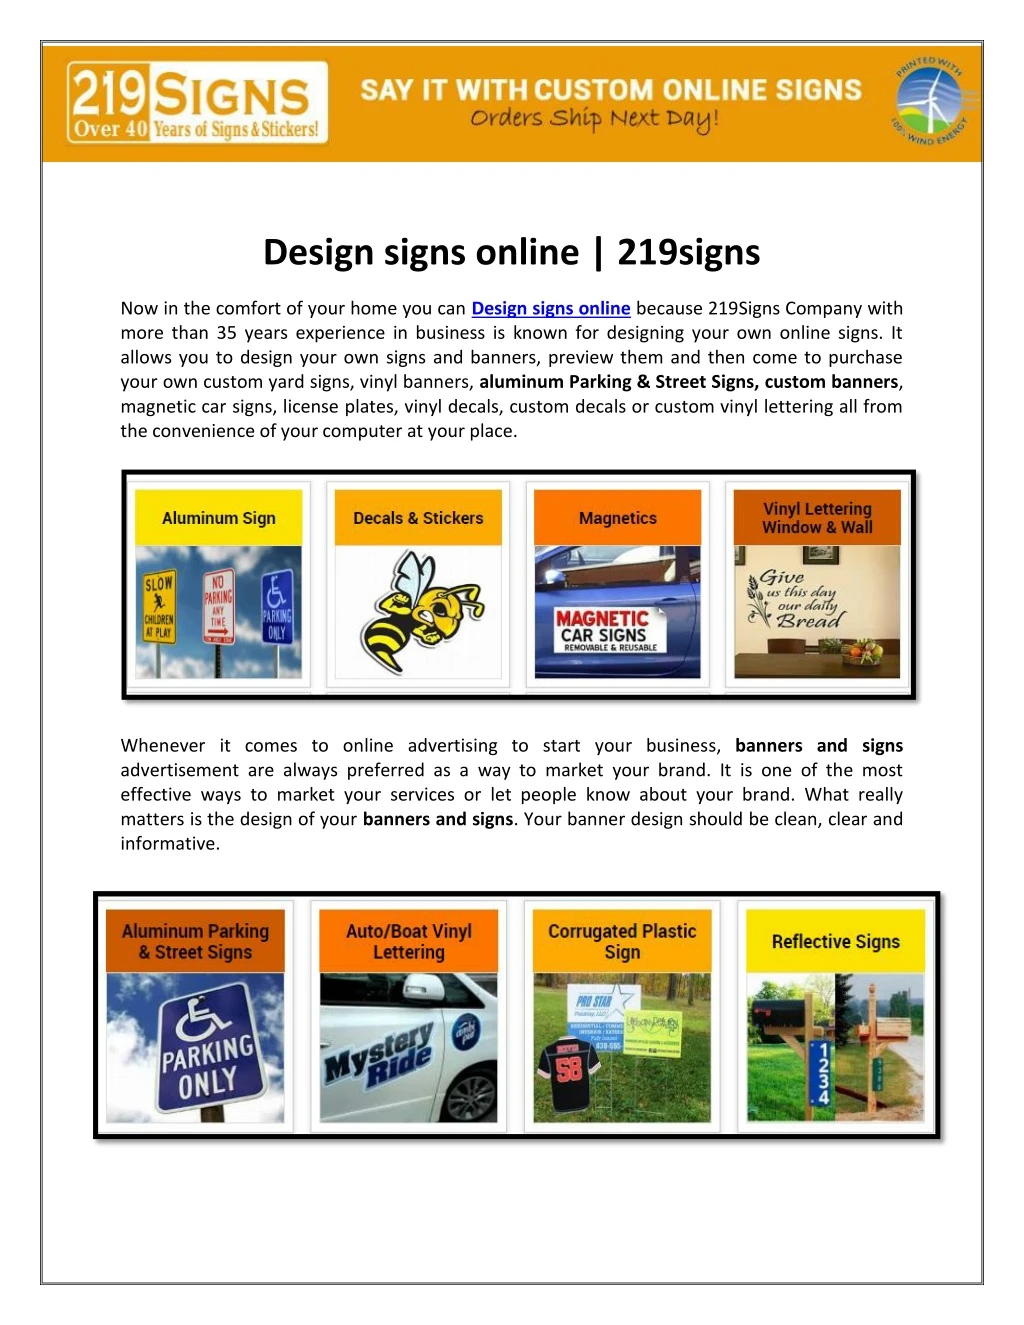 design signs online 219signs